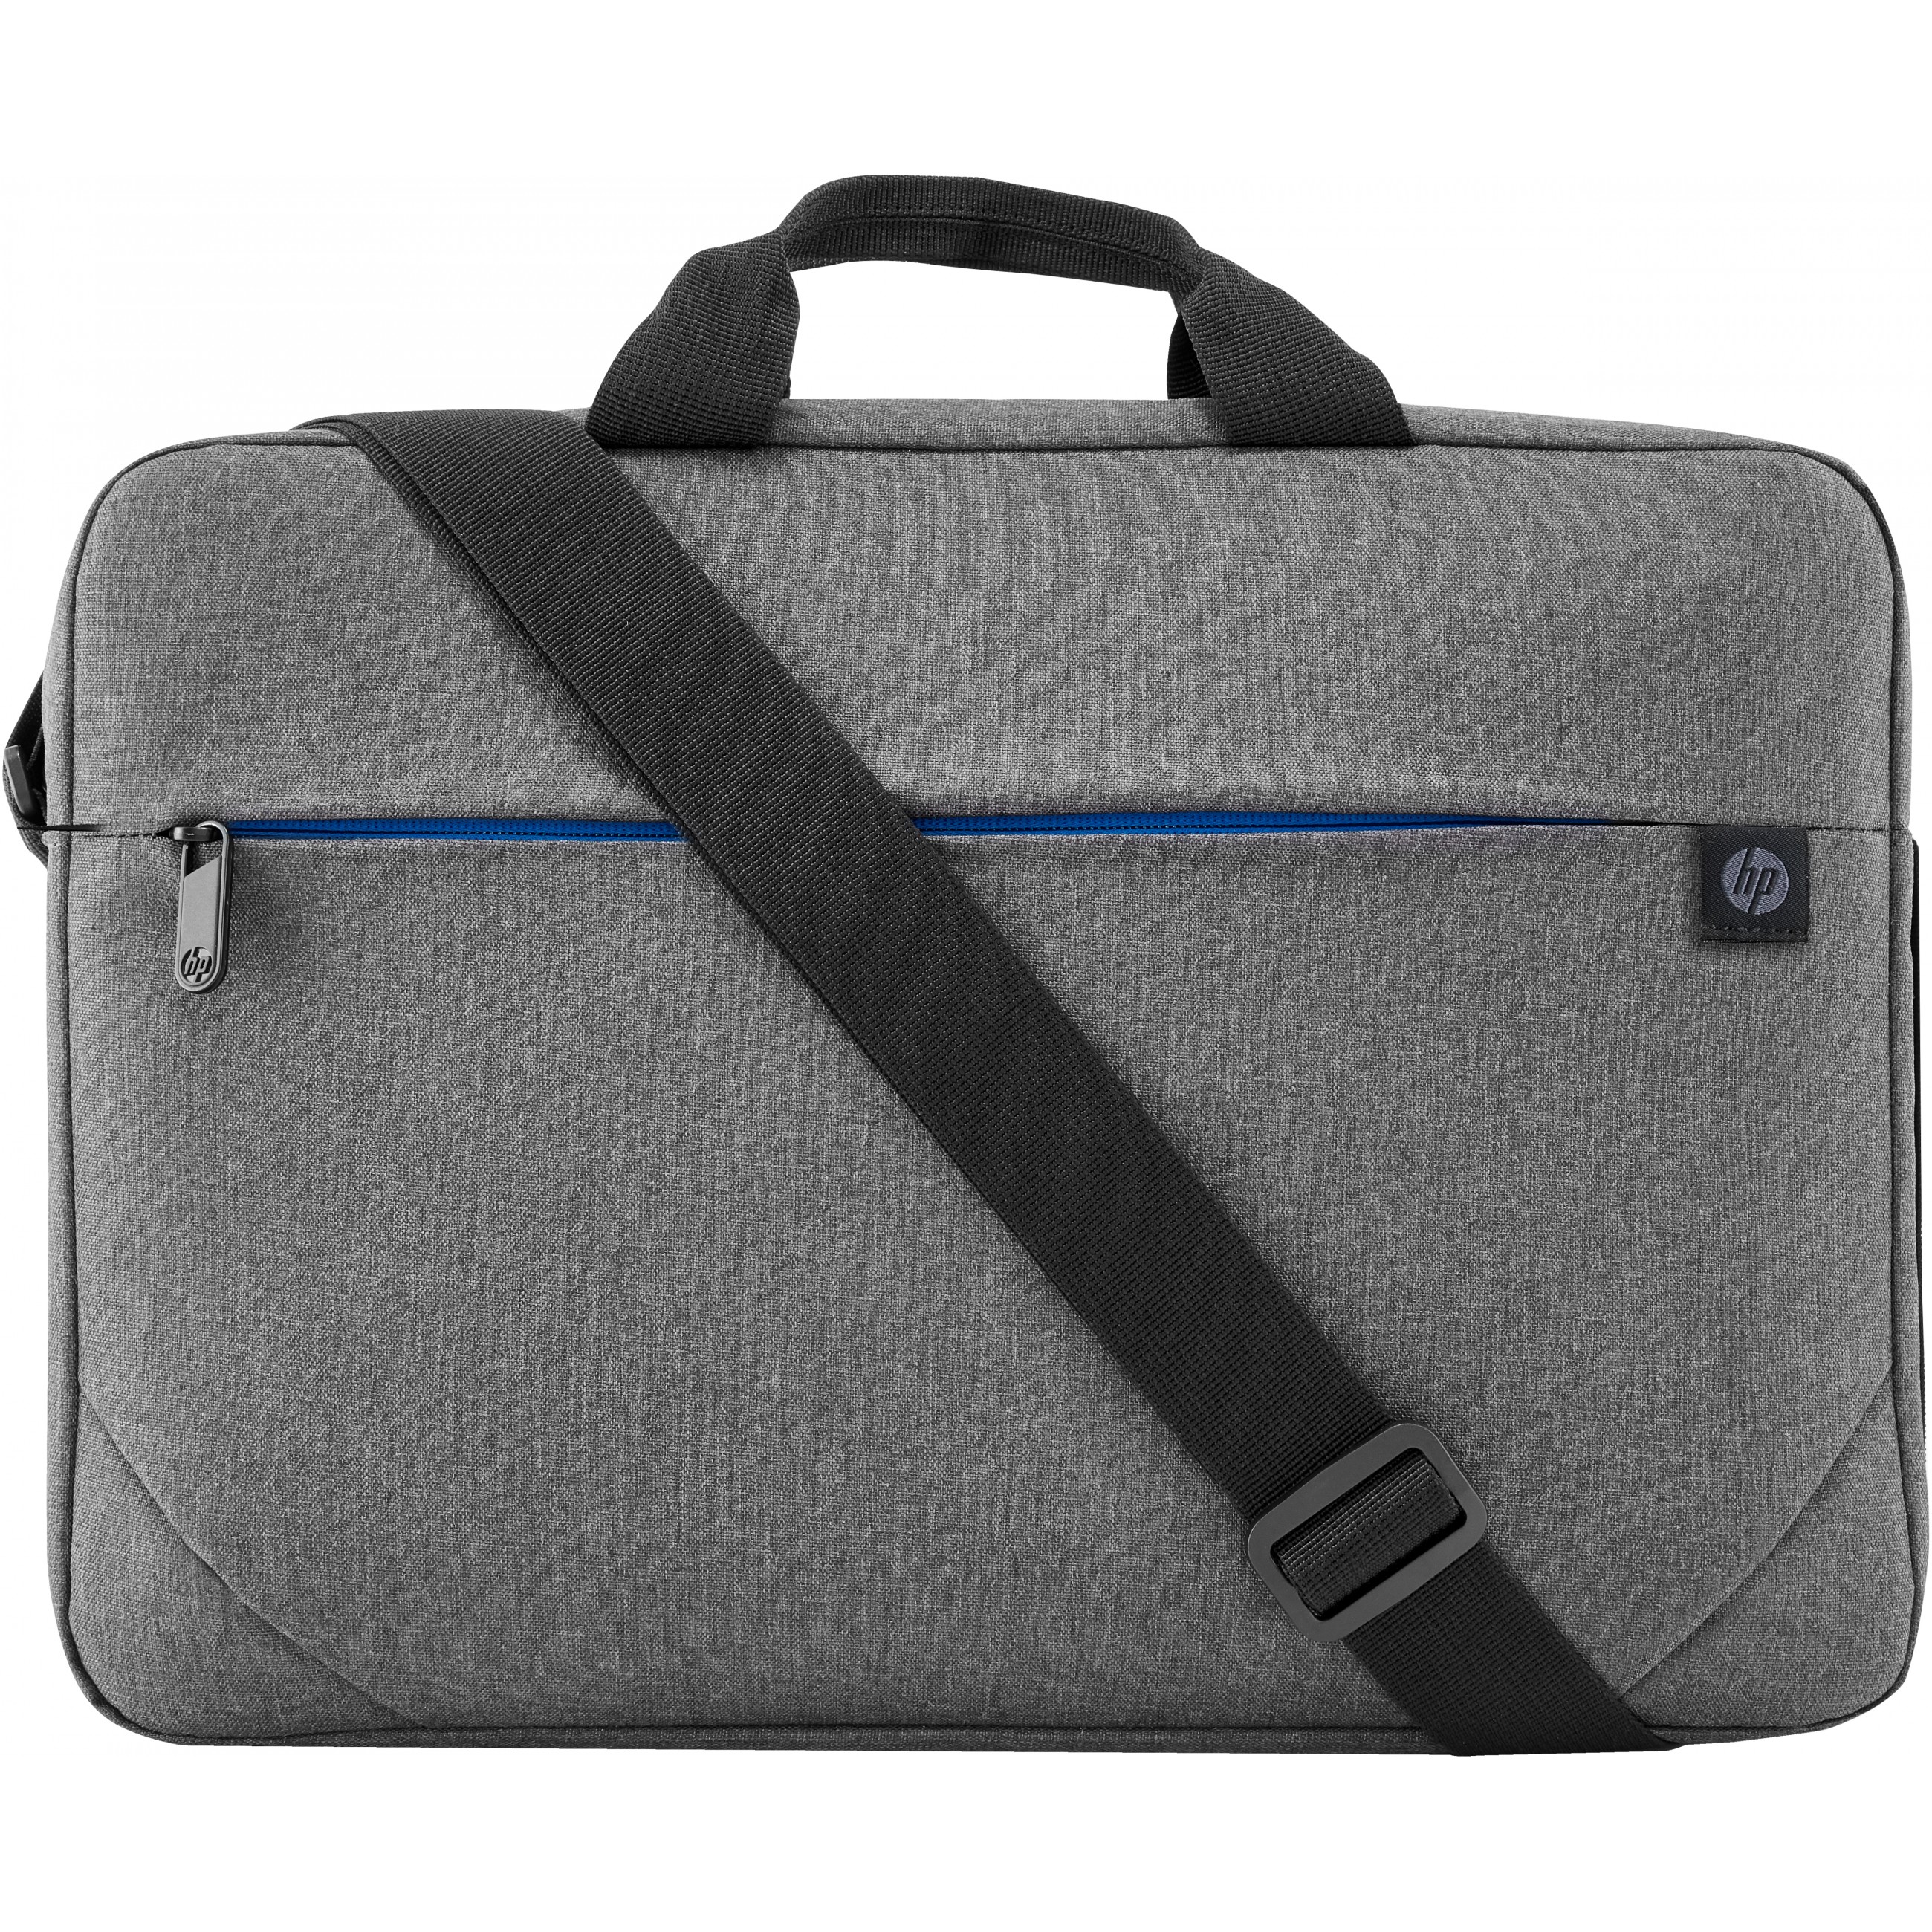 HP Prelude 39,6cm 15,6Zoll Top Load bag